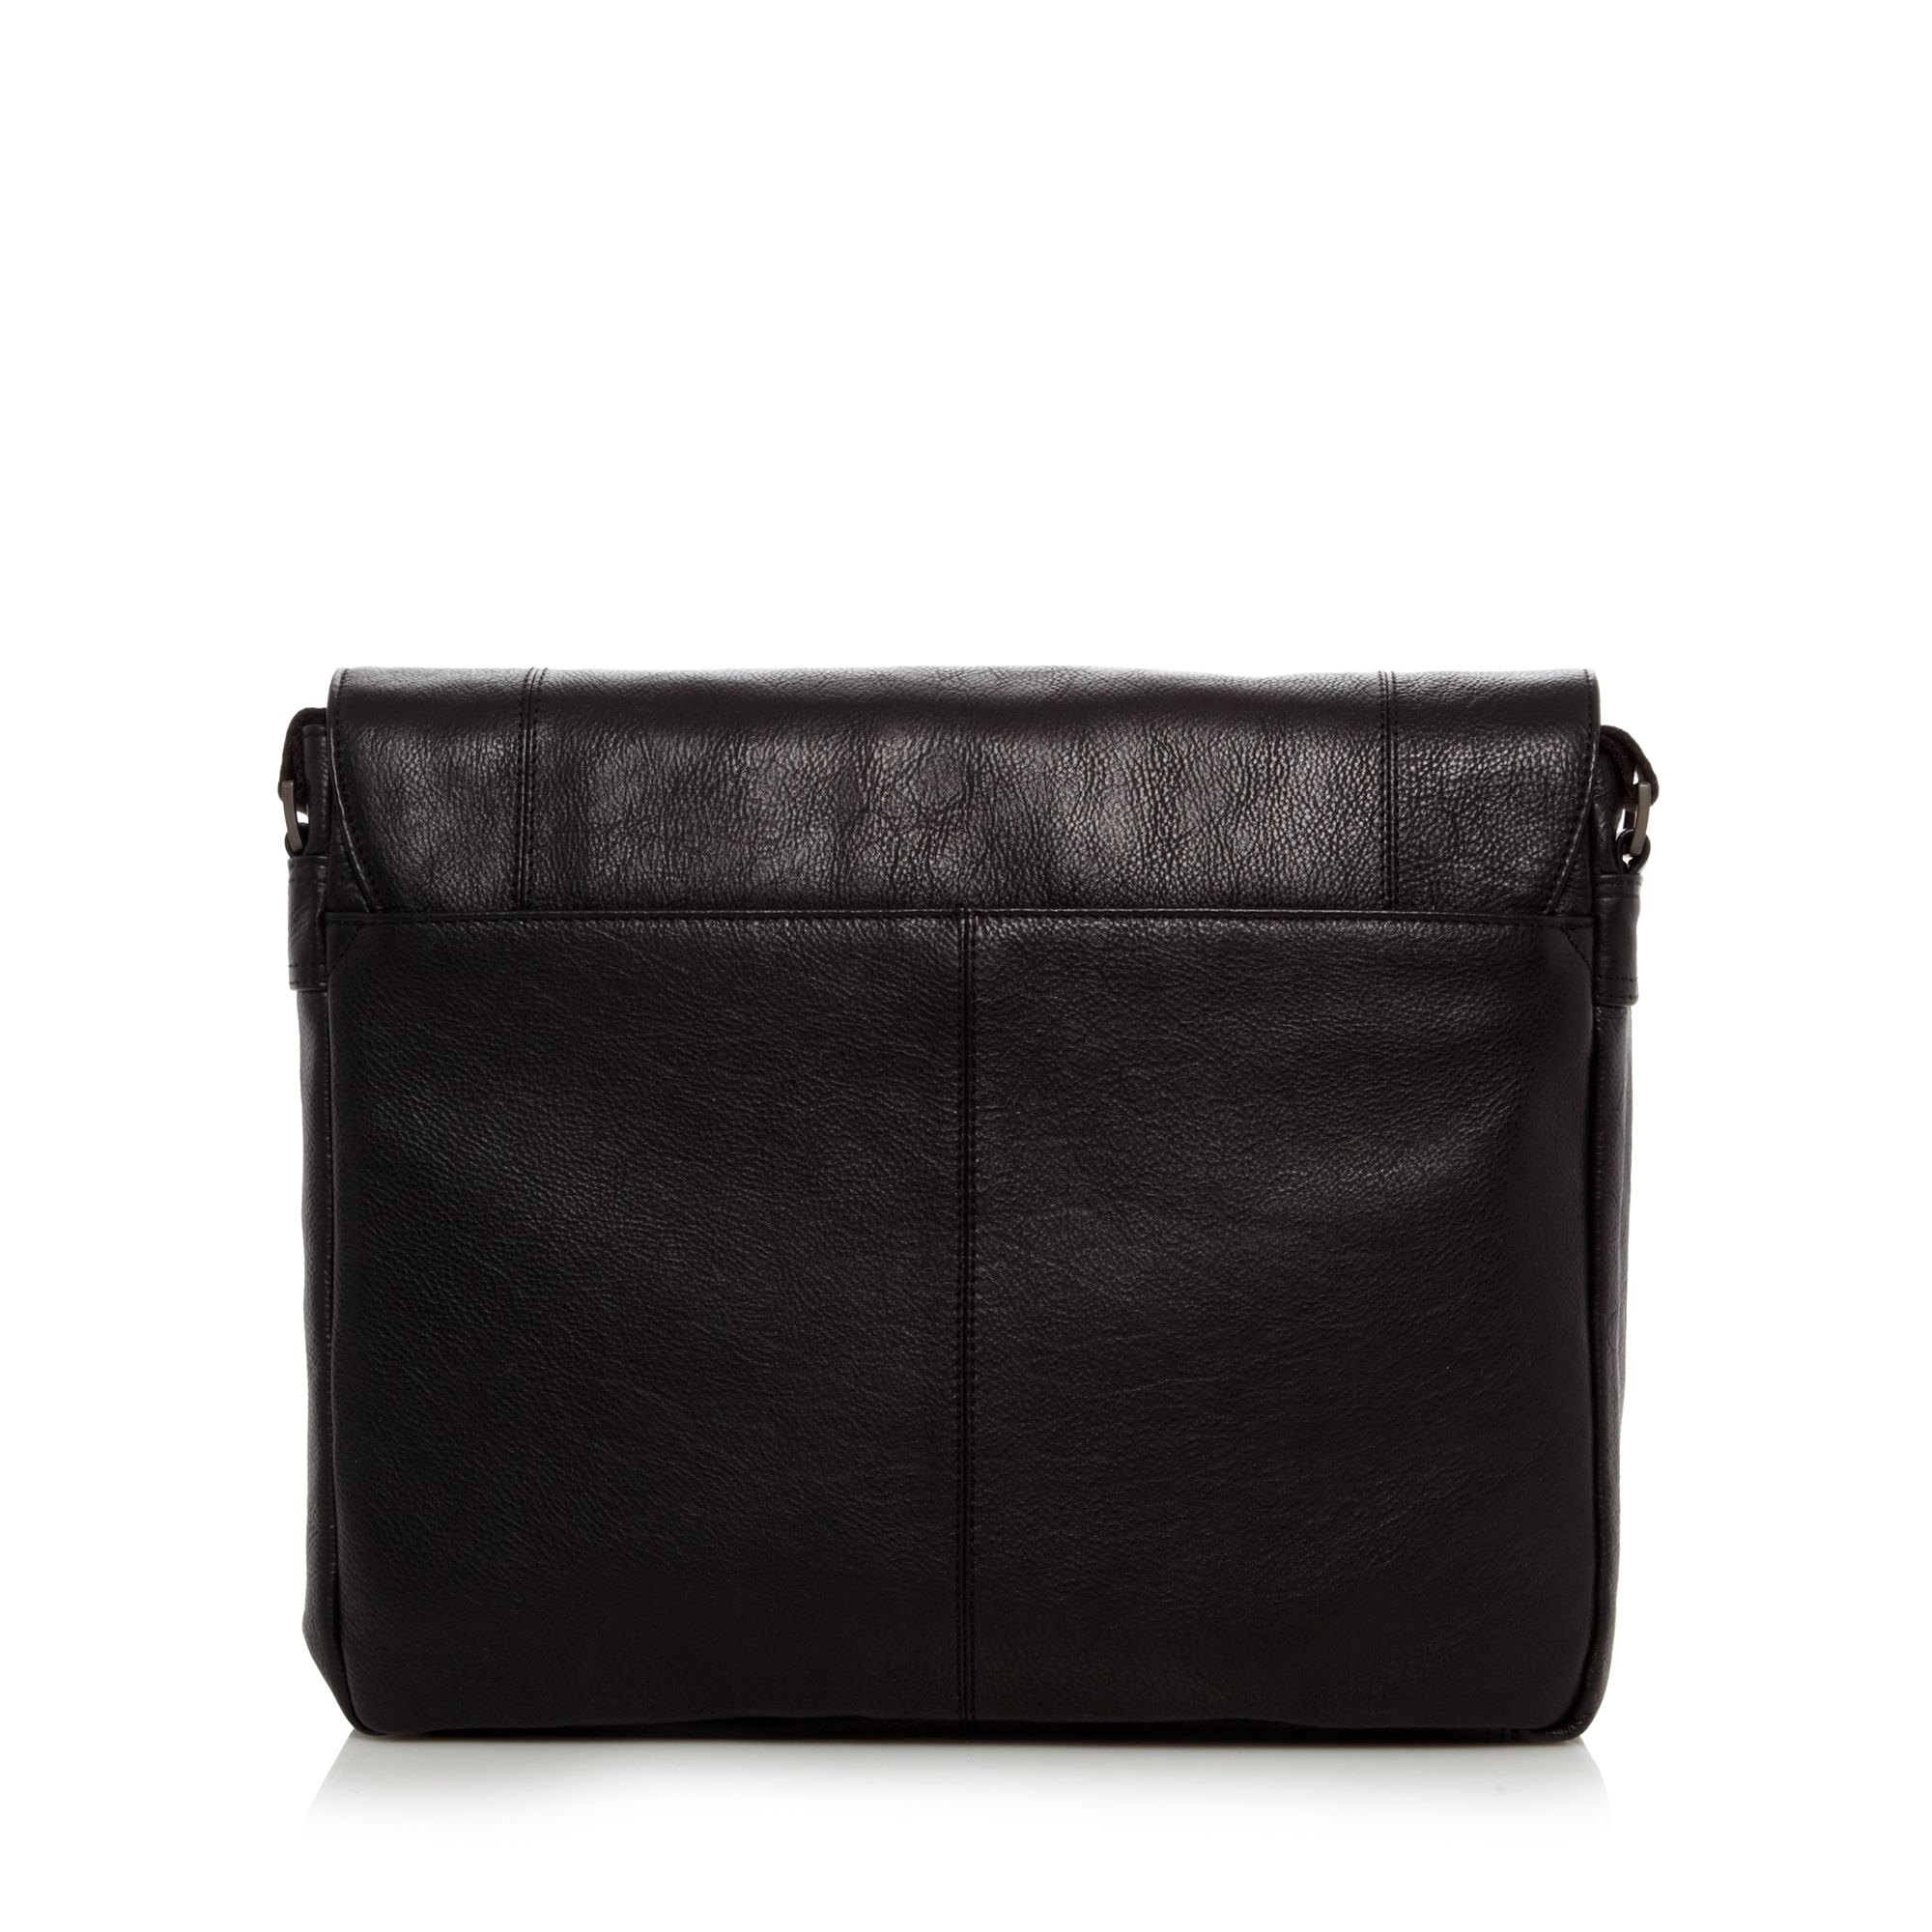 J By Jasper Conran Mens Designer Black Leather Messenger Bag From Debenhams | eBay